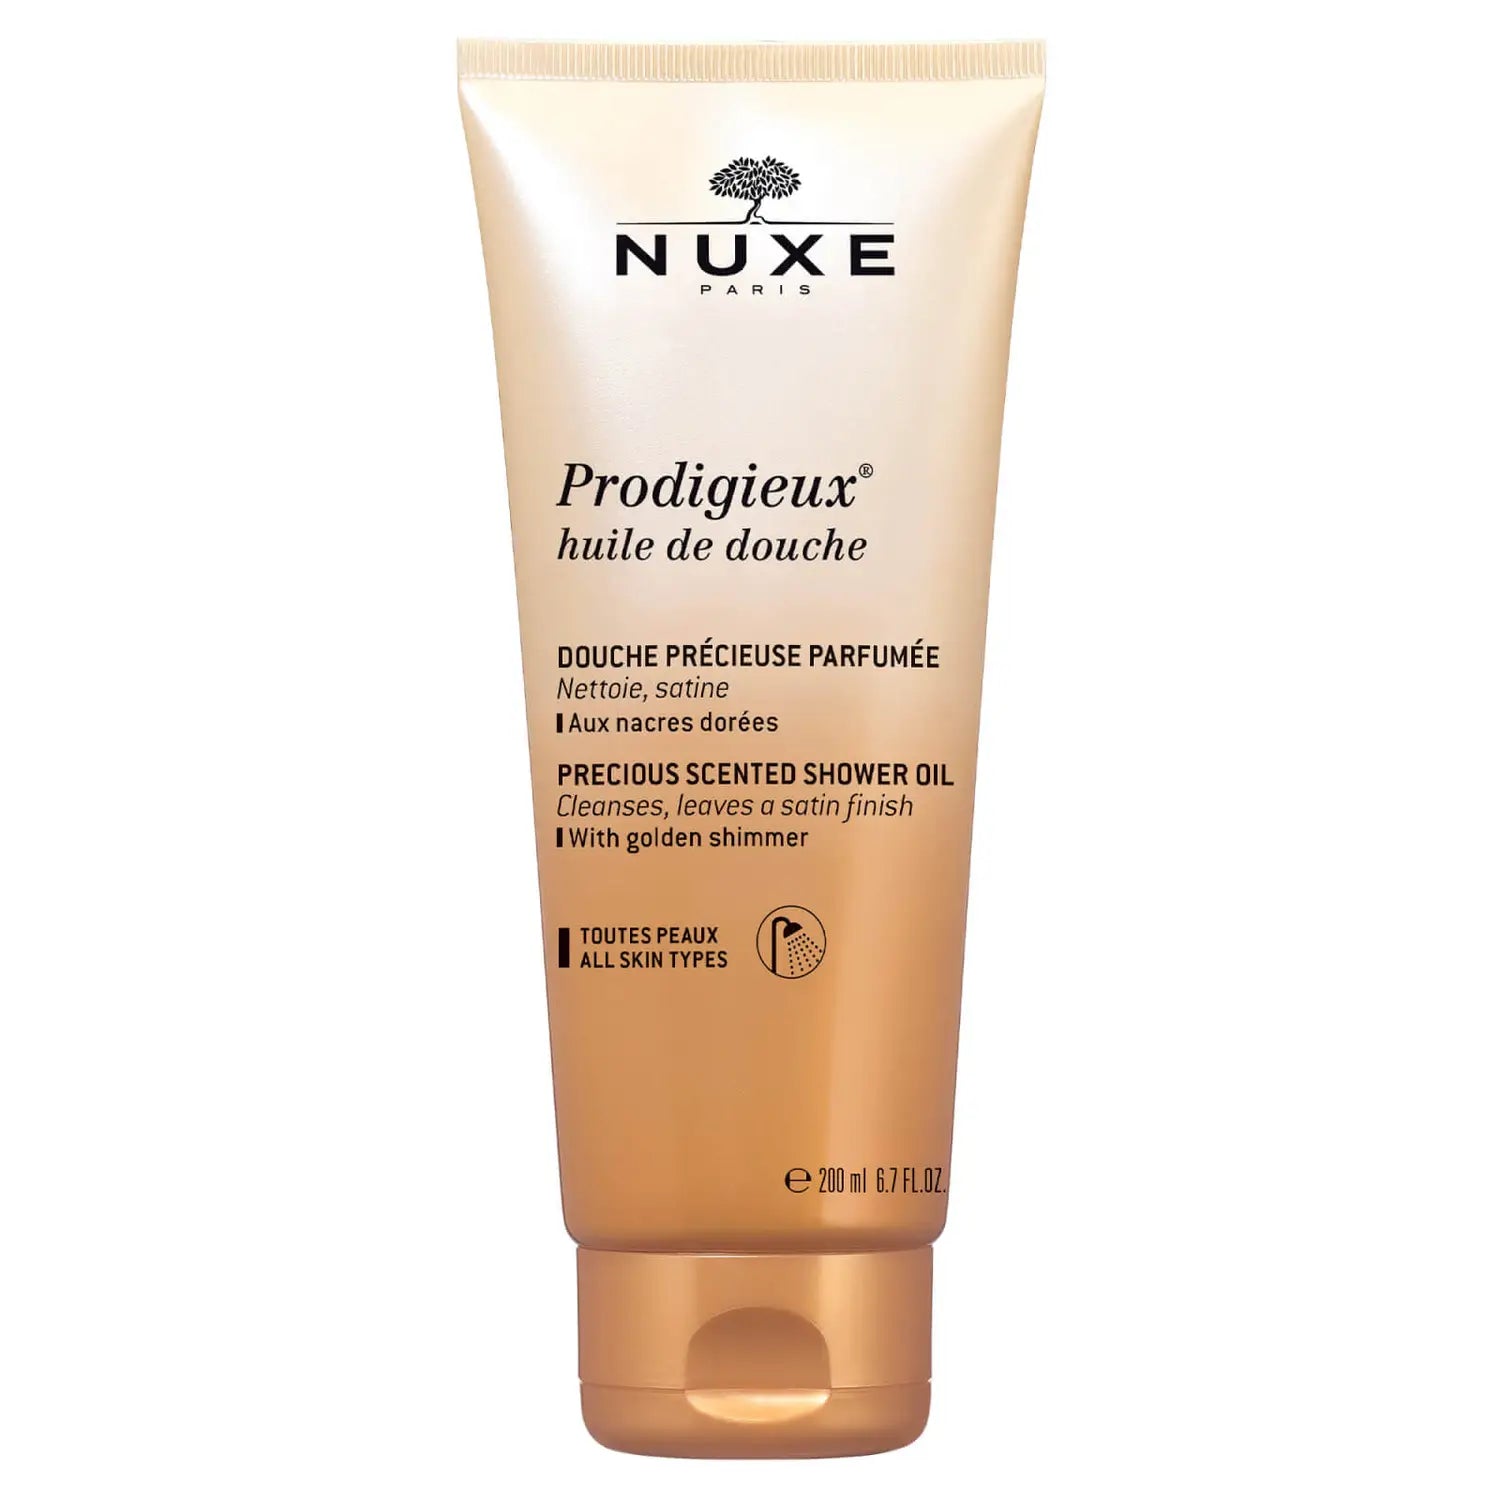 Nuxe Prodigieux® Shower oil 200 ml